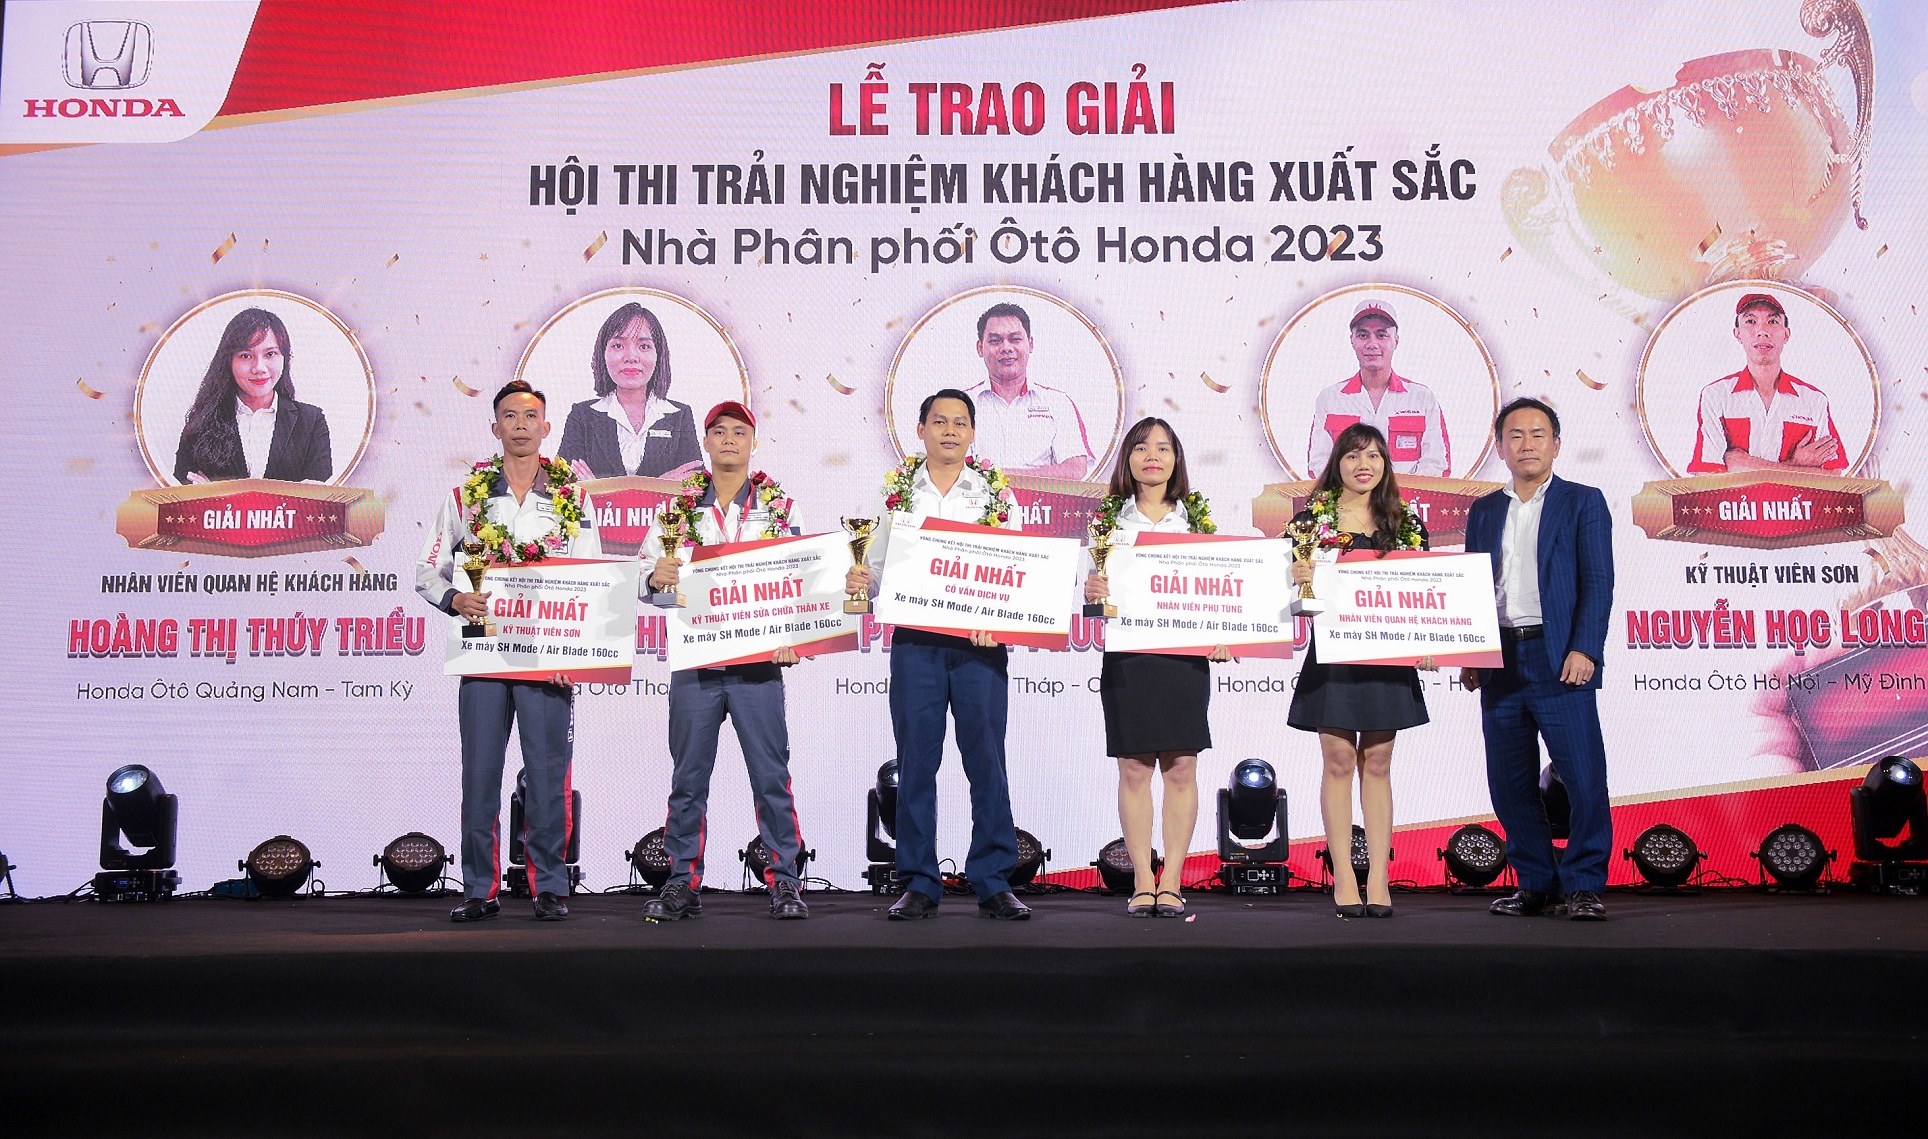 Honda Vietnam organizes the final round of the 